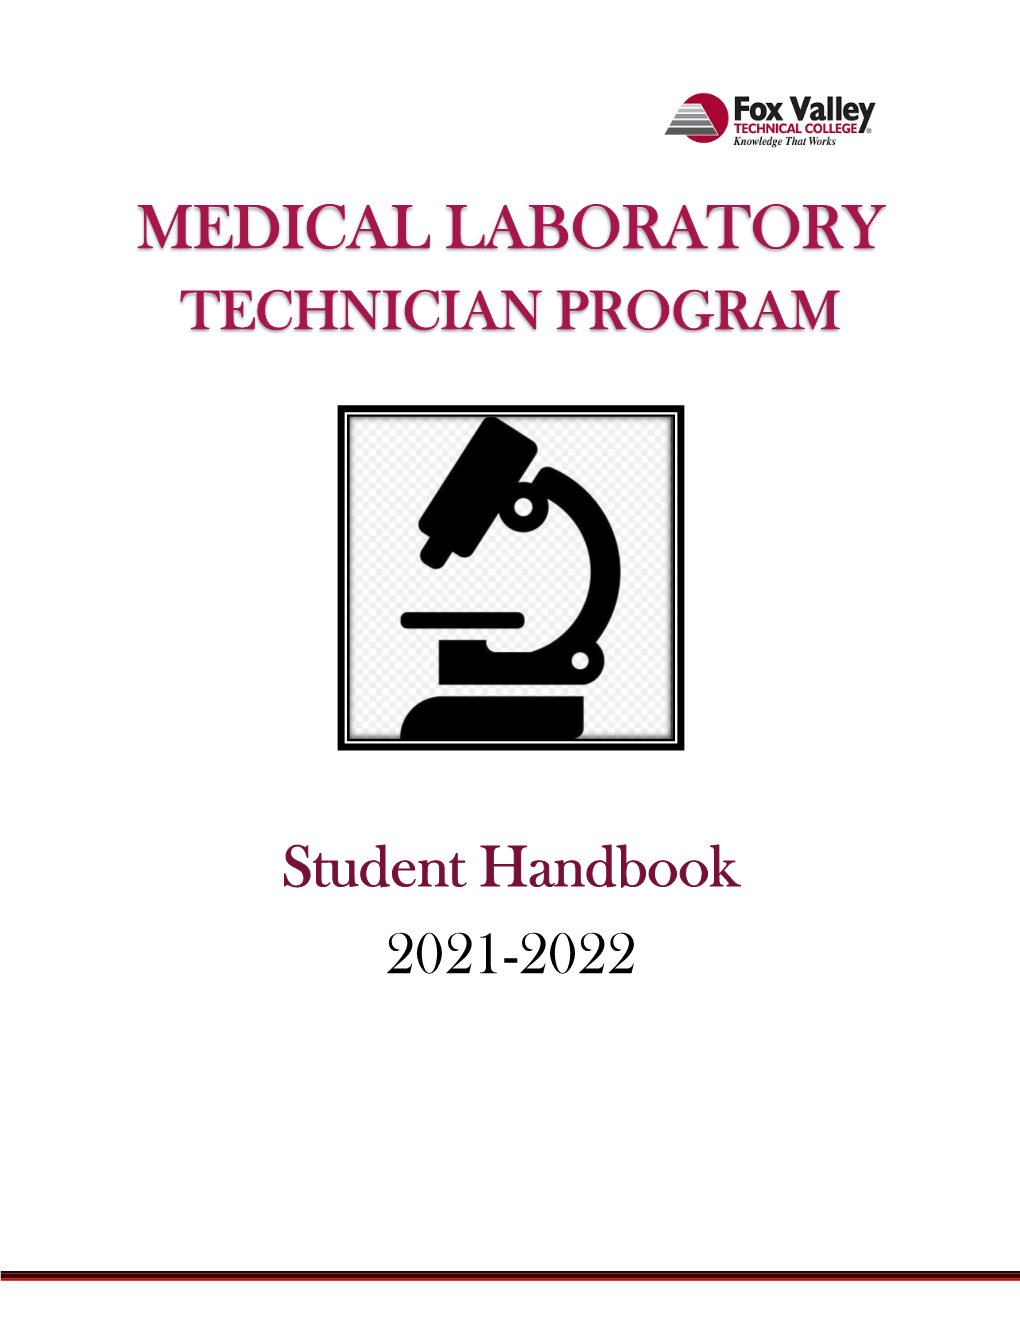 Medical Laboratory Technician Student Handbook